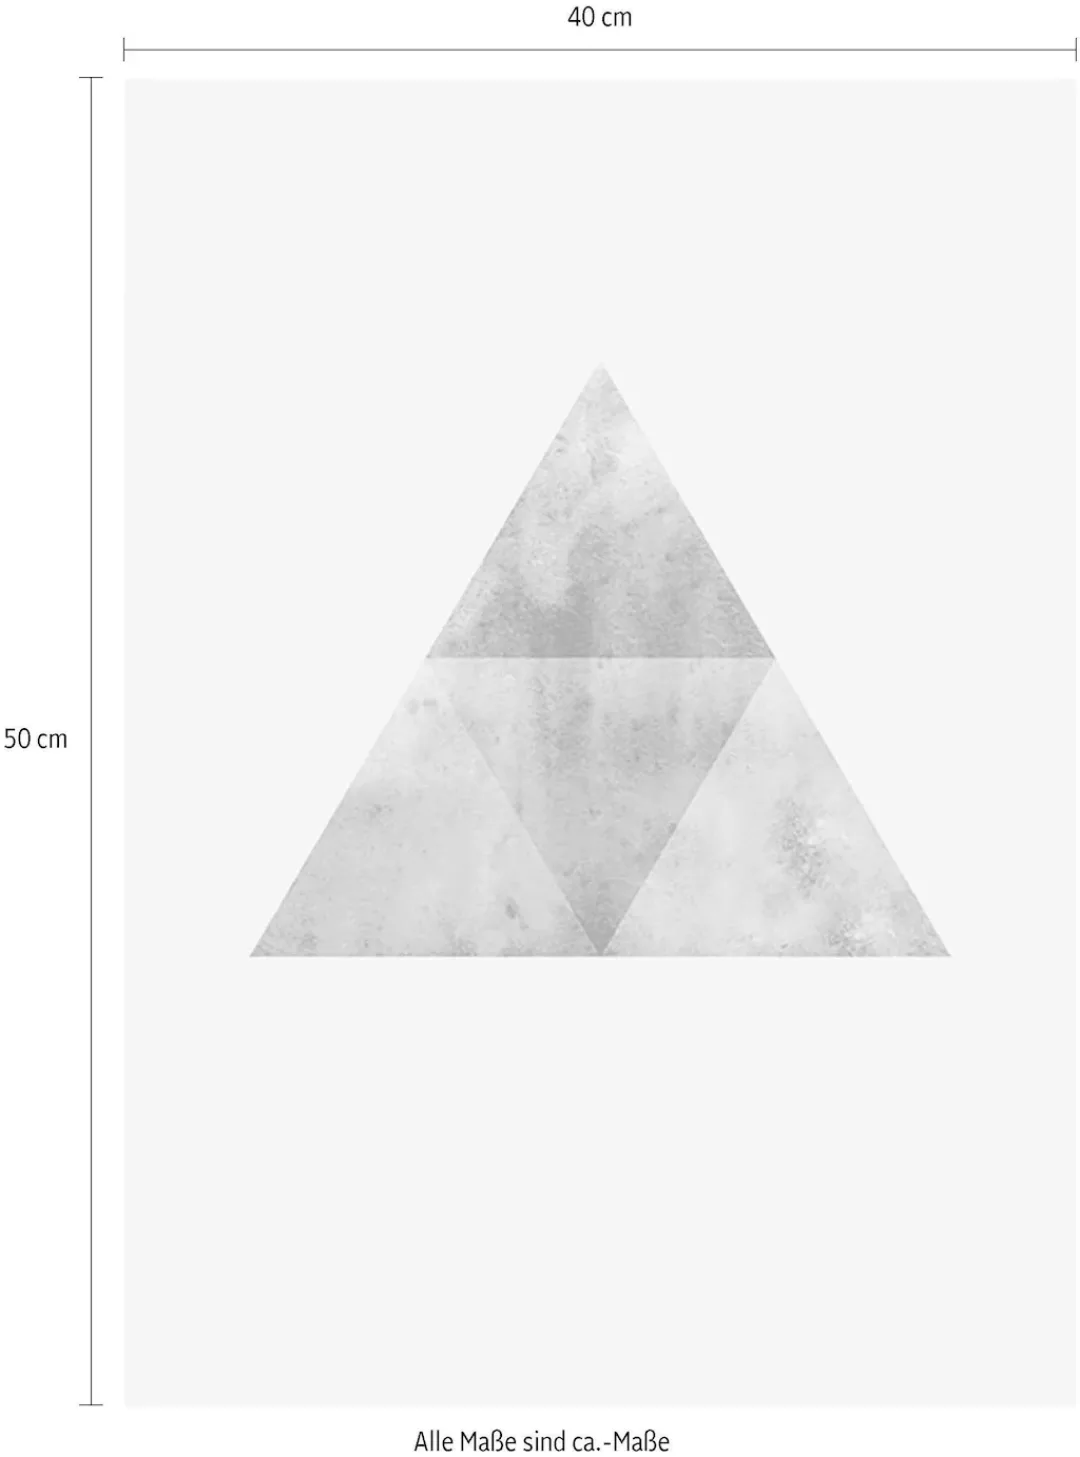 Komar Poster "Triangles Top Blue", Formen-Kunst, (1 St.) günstig online kaufen